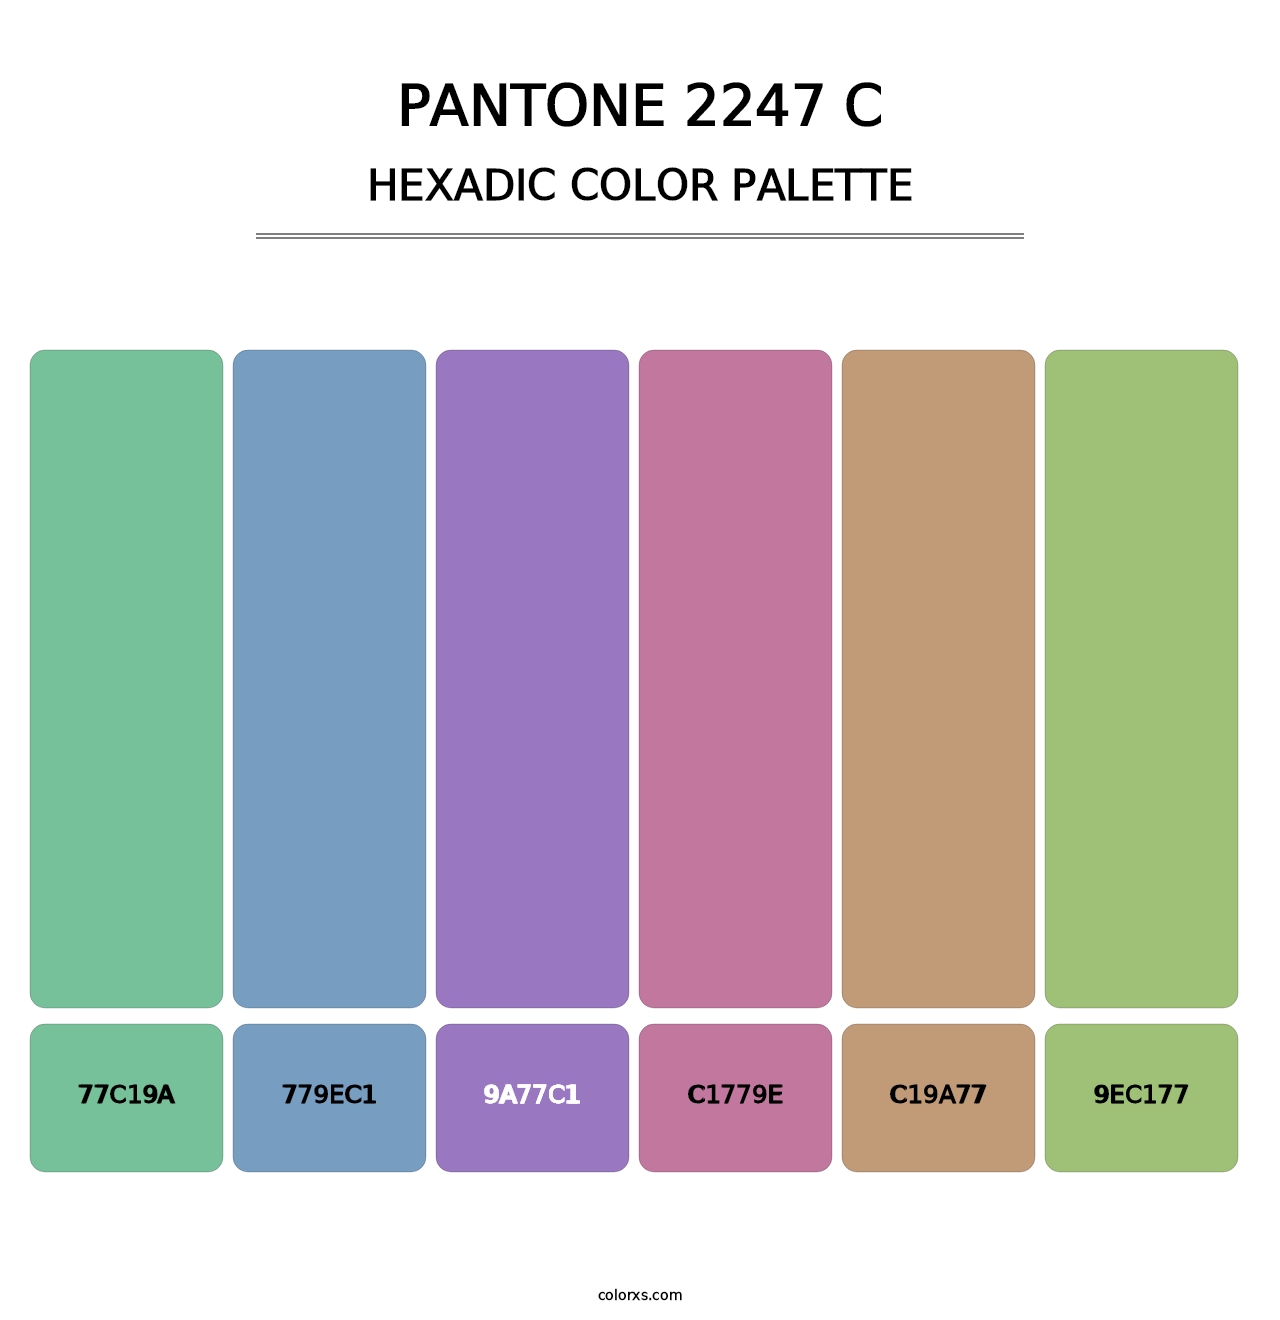 PANTONE 2247 C - Hexadic Color Palette